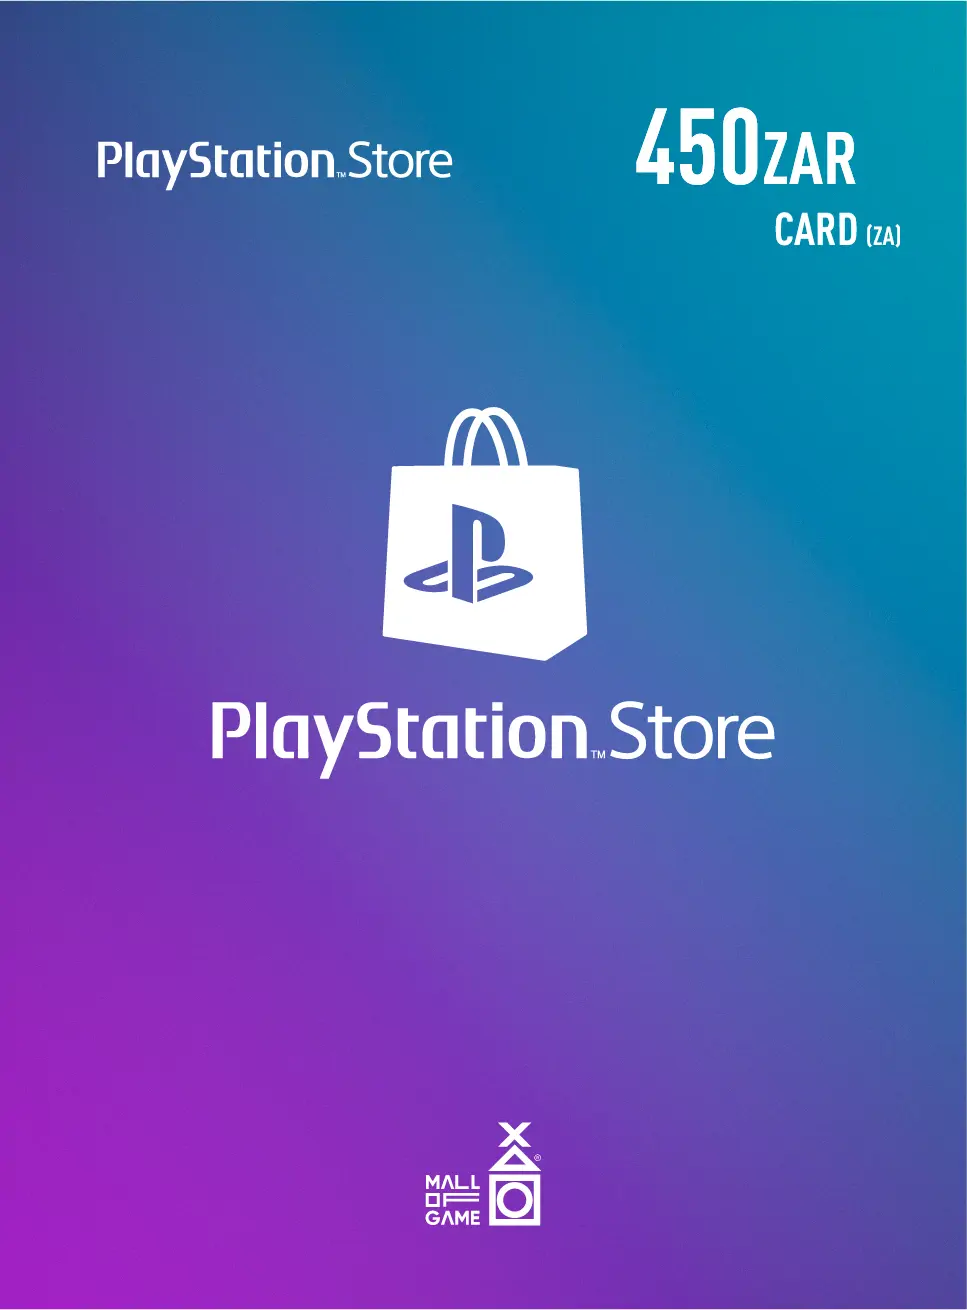 PlayStation™Store ZAR450 Gift Cards (ZA)